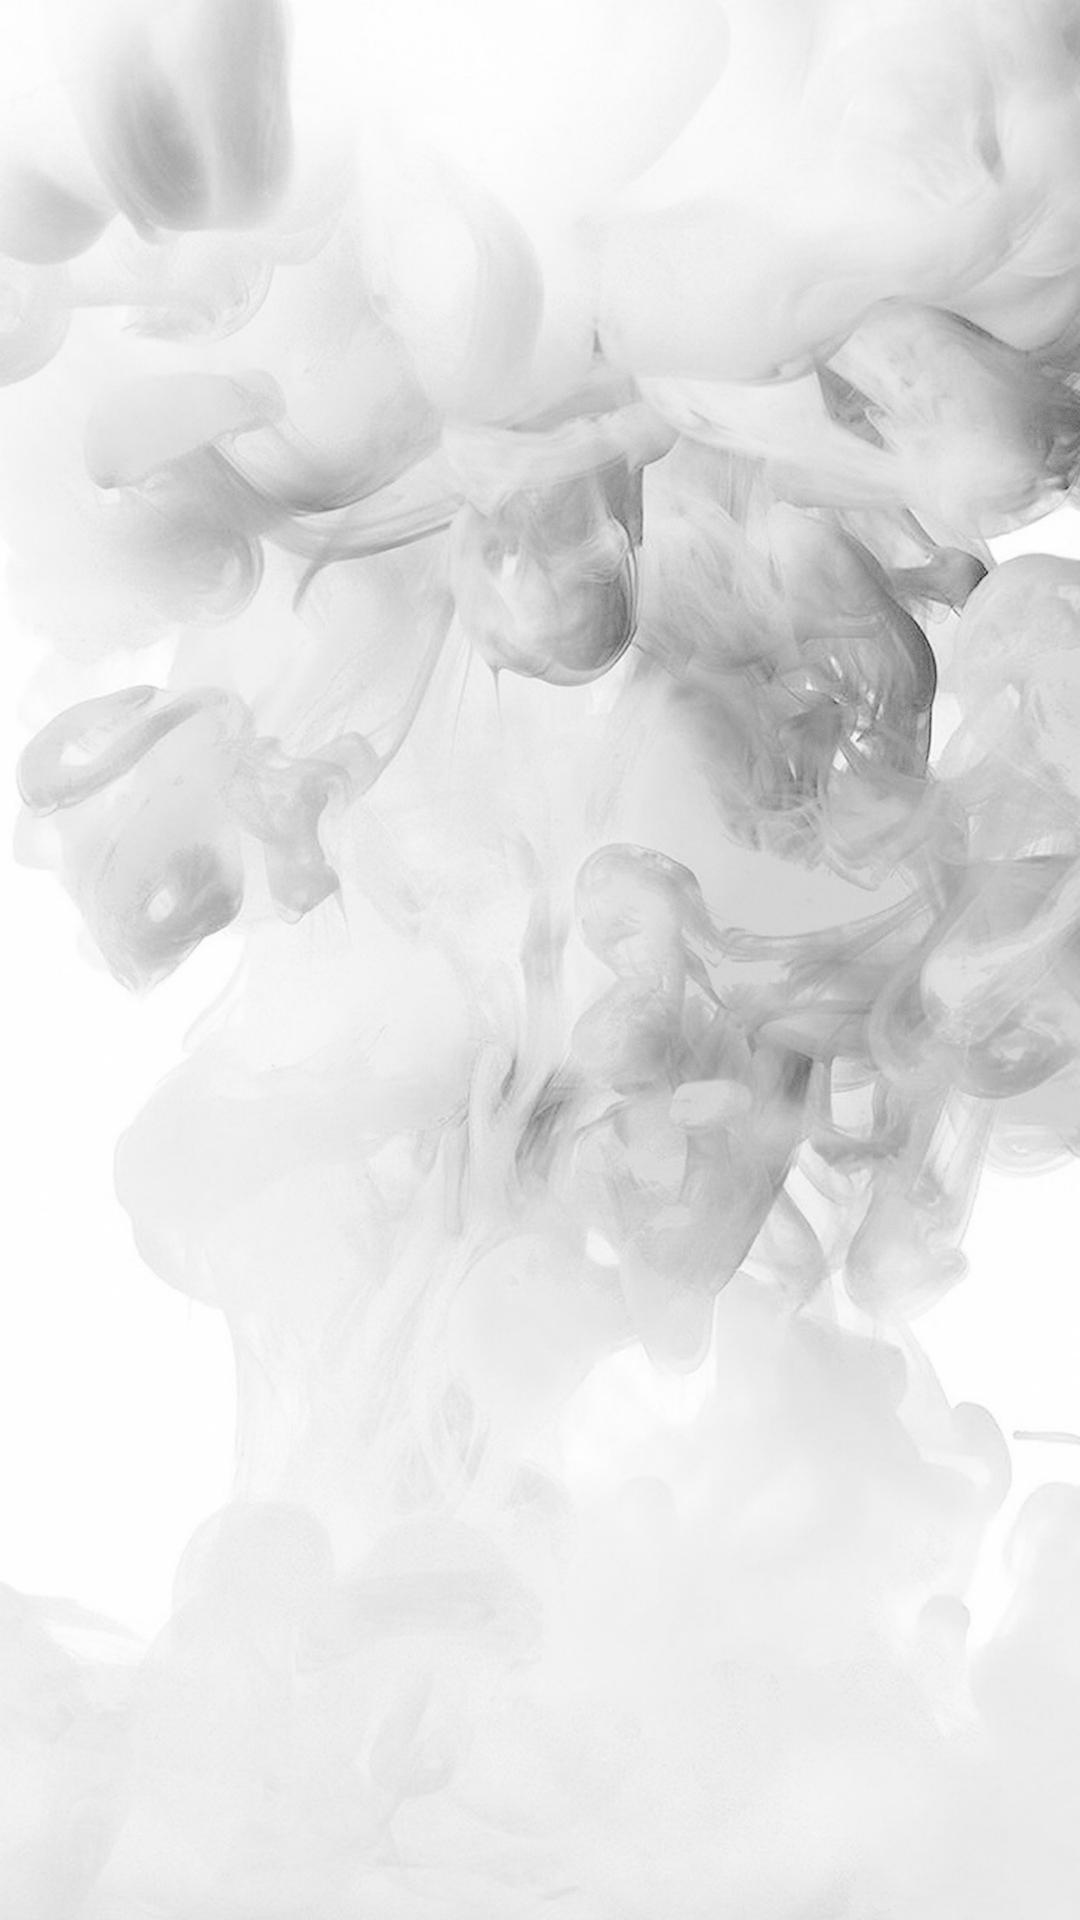 Smoke White Abstract Fog Art Illust iPhone 8 Wallpaper Free